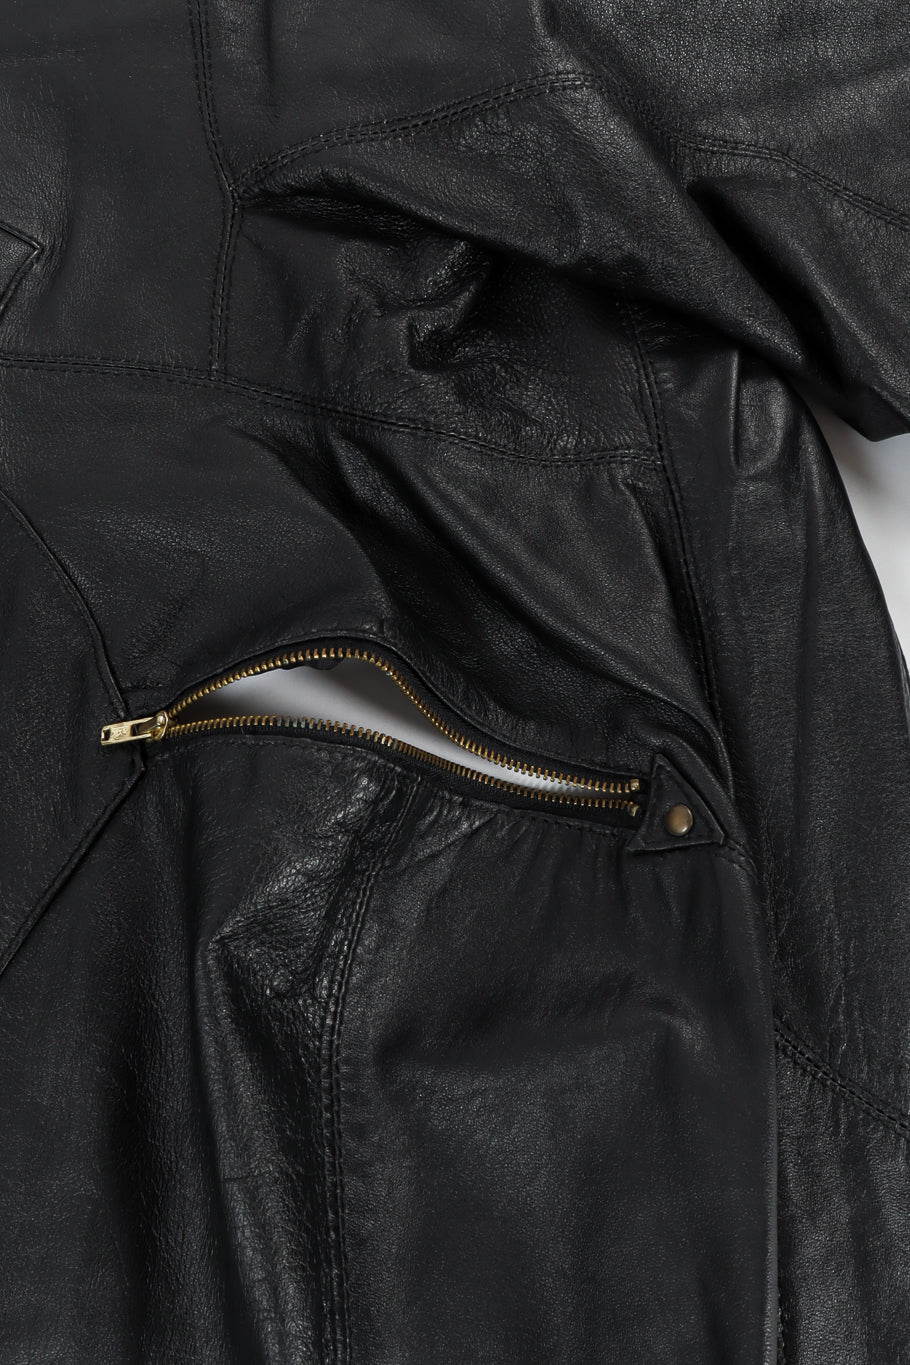 Vintage Mario Zarelli Leather Moto Pencil Dress side zipper opening @ Recess LA